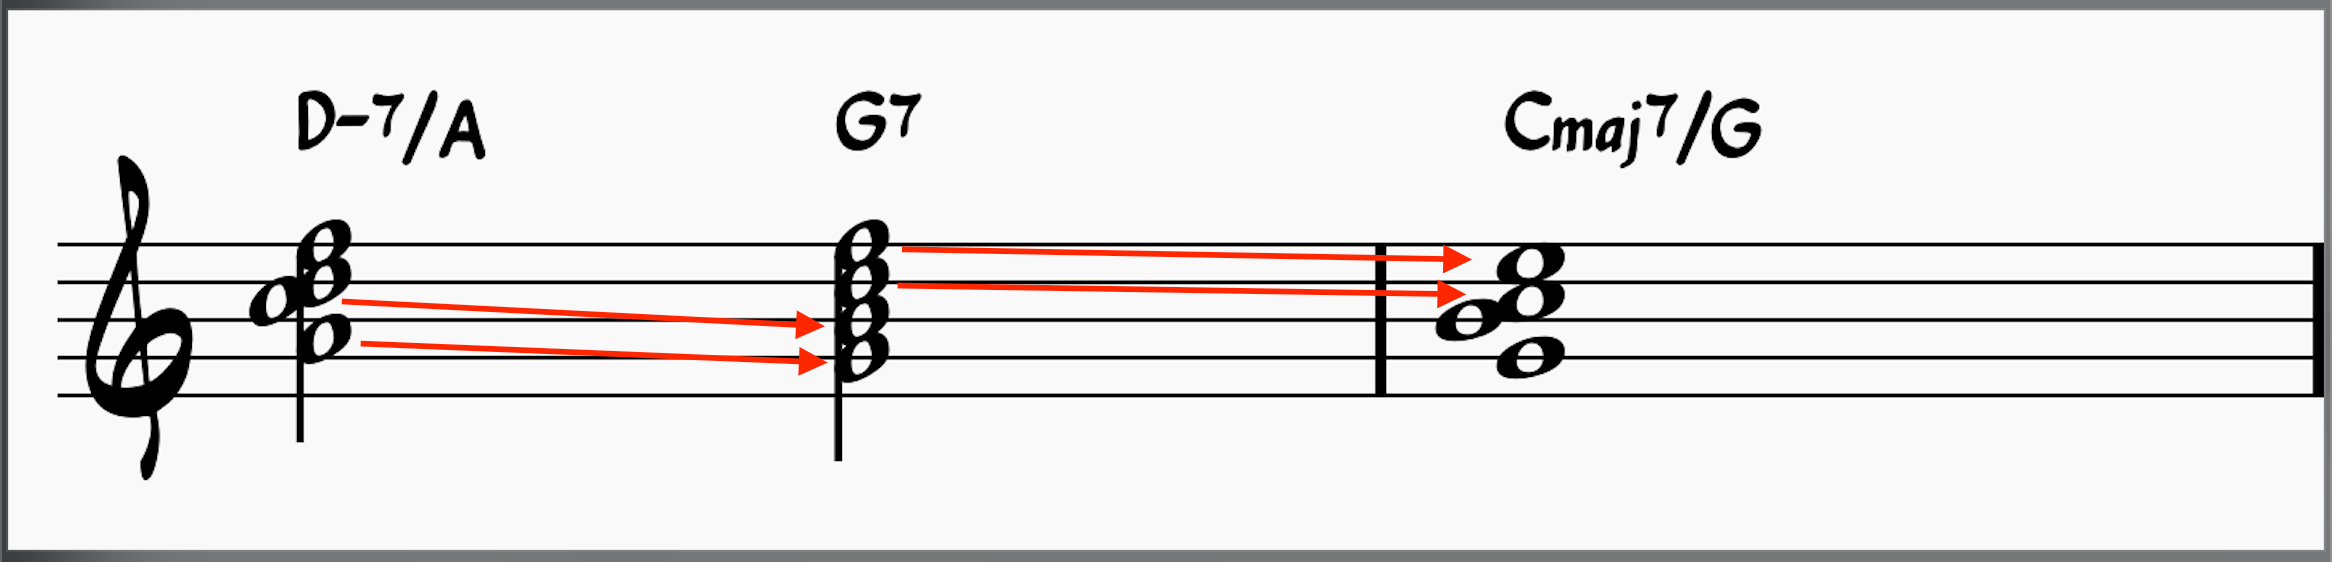 ii-V-I progression using chord inversions